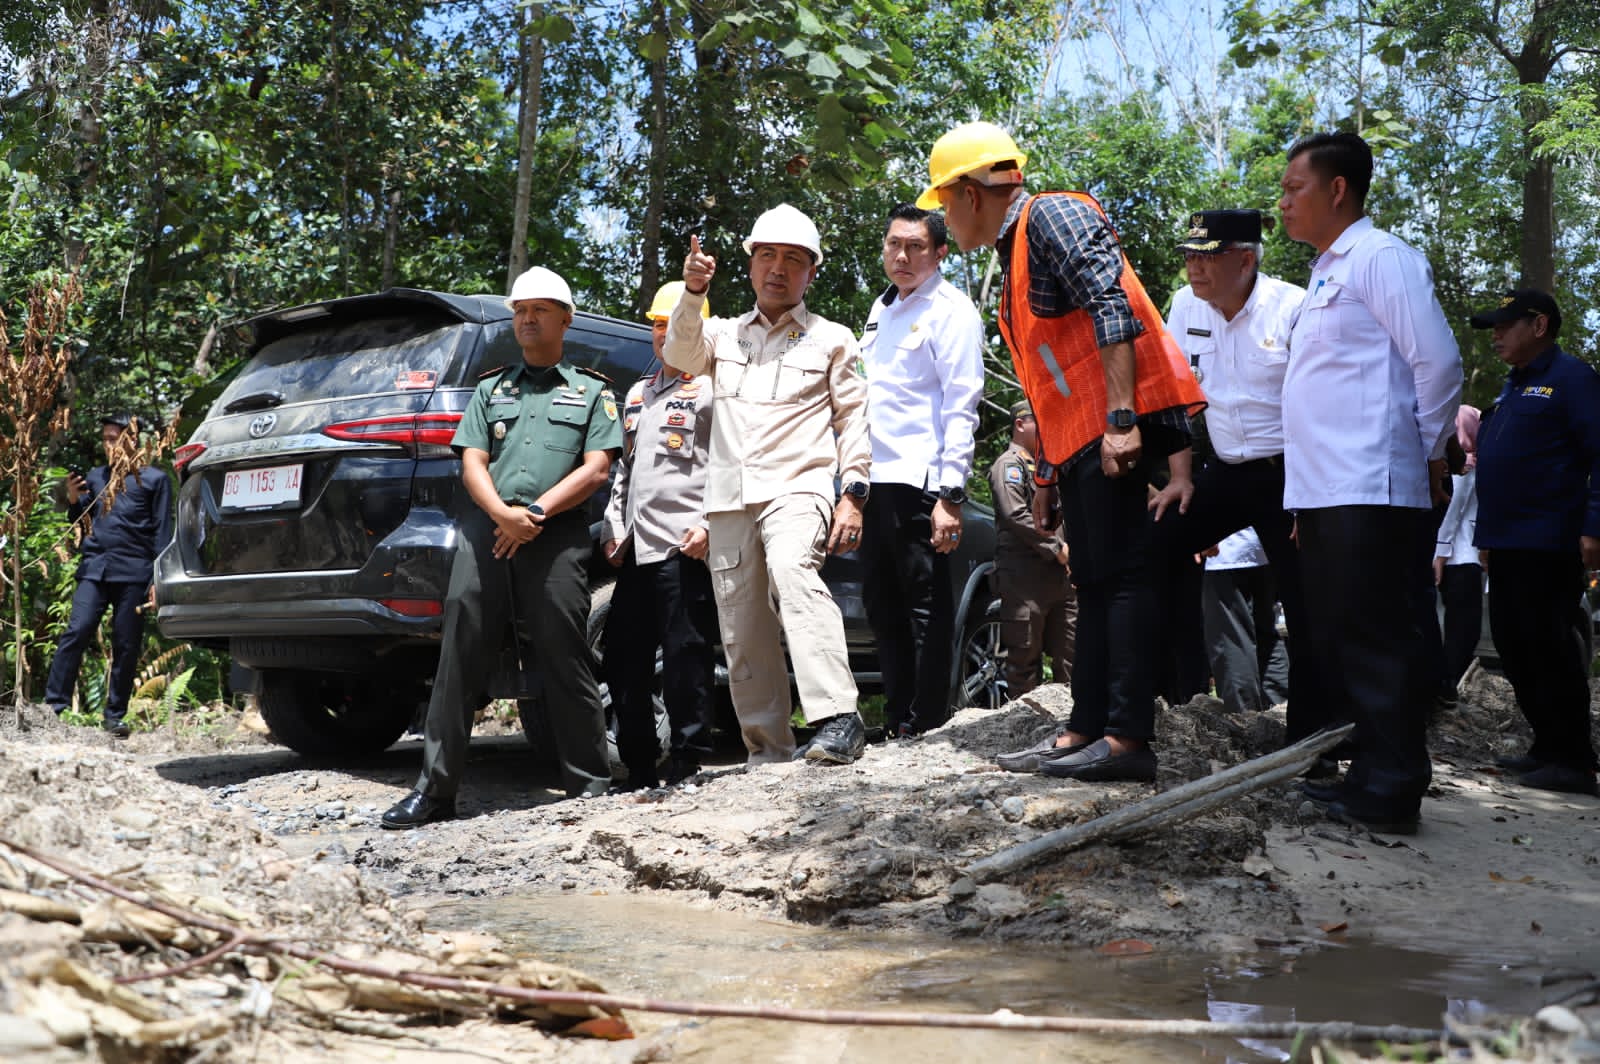 Gandeng Kodim 0401 Muba, Pemkab Perbaiki Jalan 26 Kilometer Melalui Karya Bakti